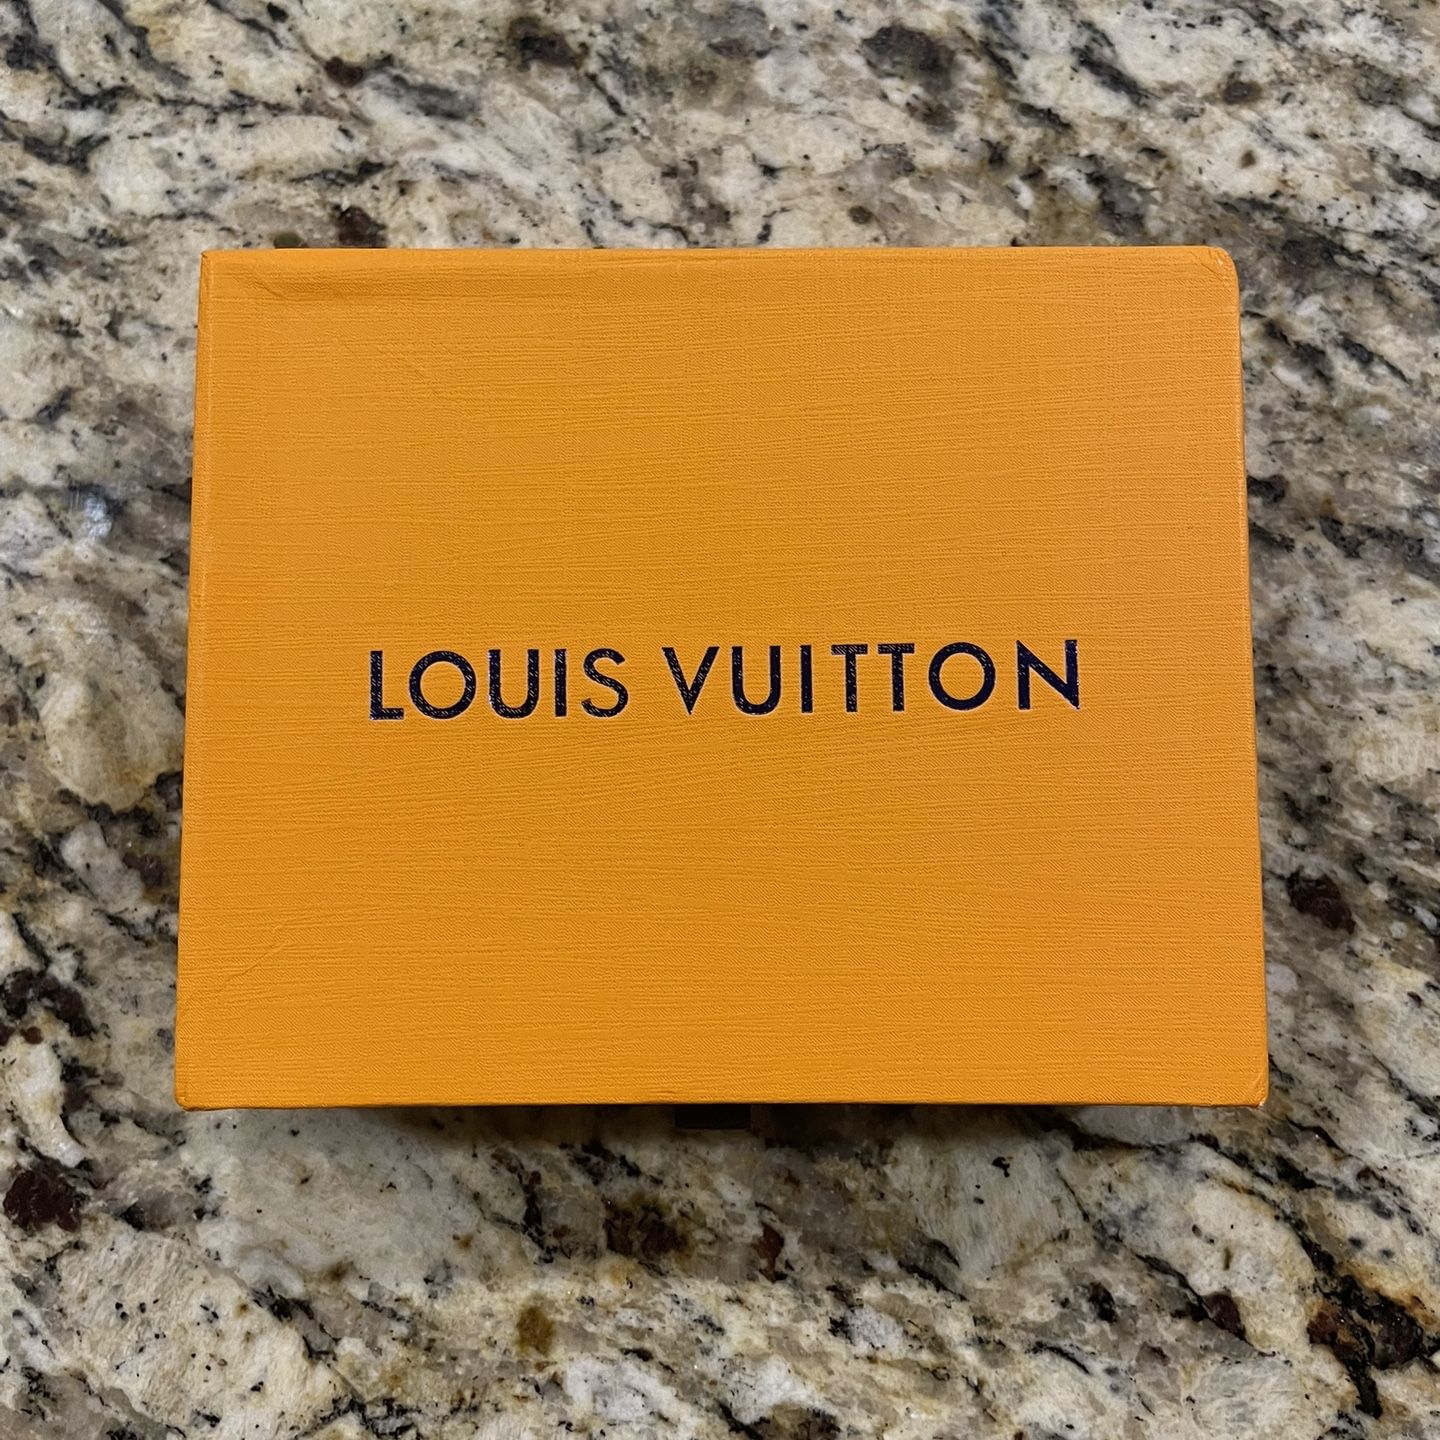 Louis Vuitton Wallet!!!